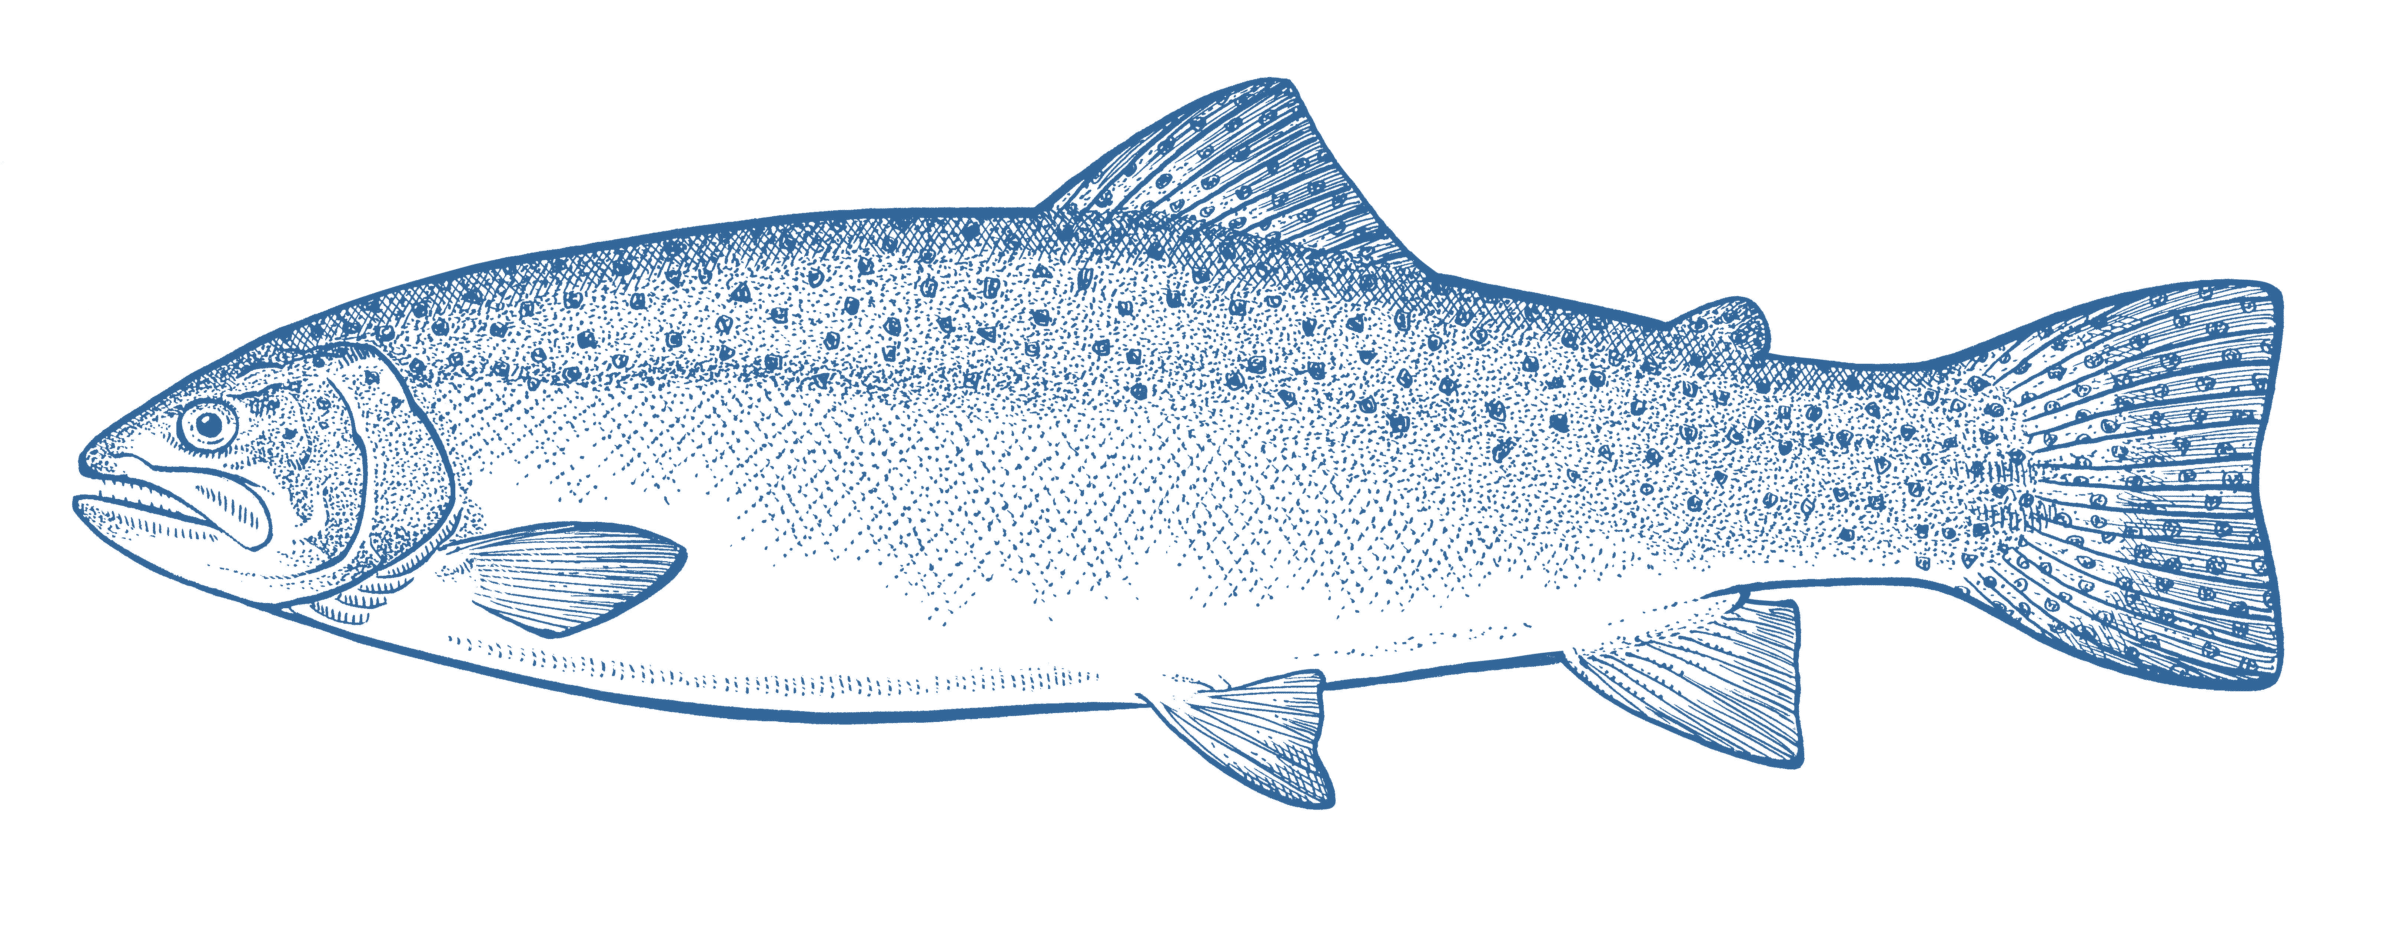 Rainbow Trout - GoodFish Australia's Sustainable Seafood Guide